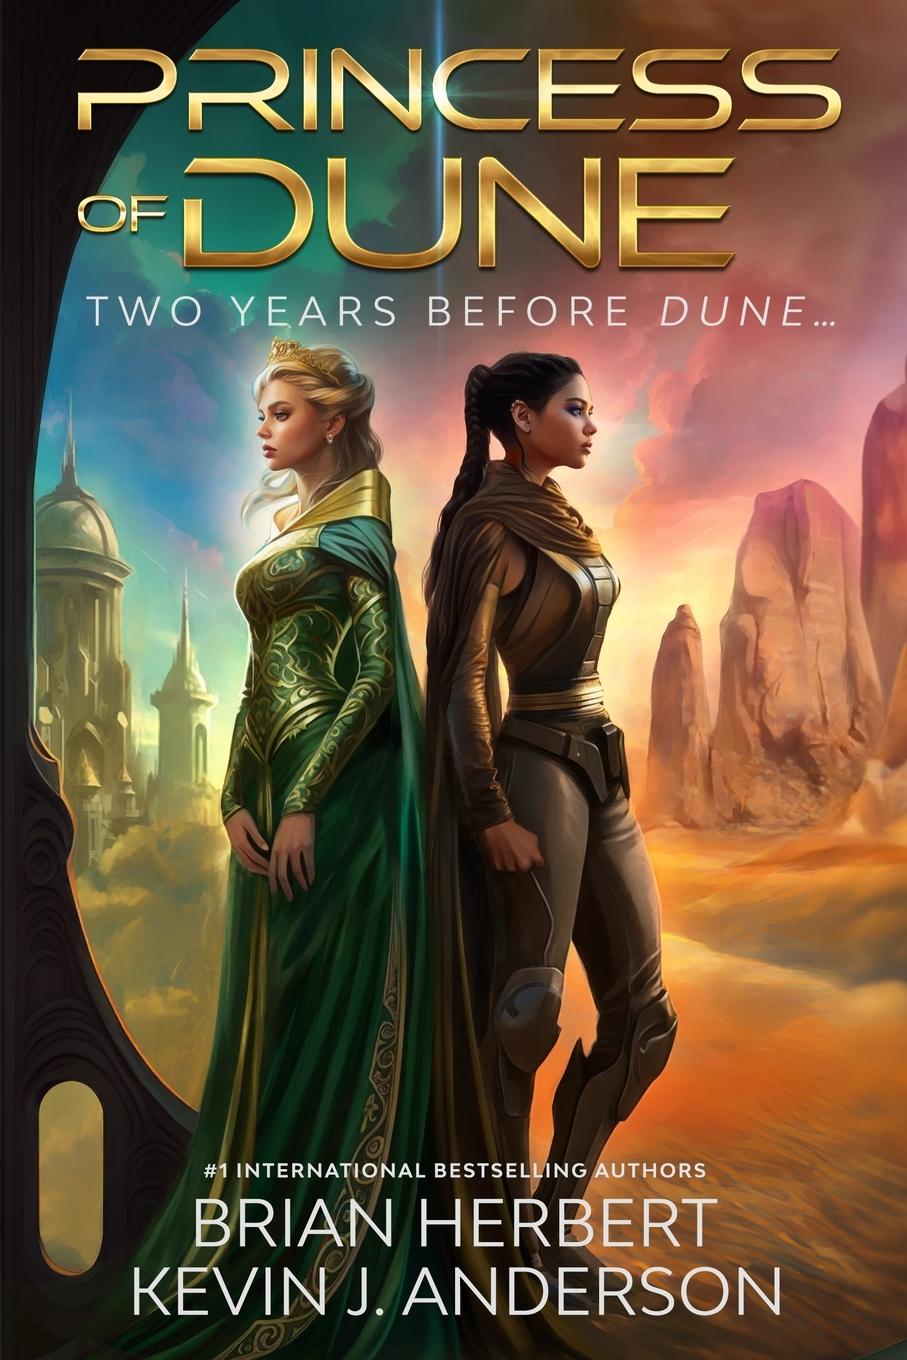 Book Princess of Dune Kevin J. Anderson